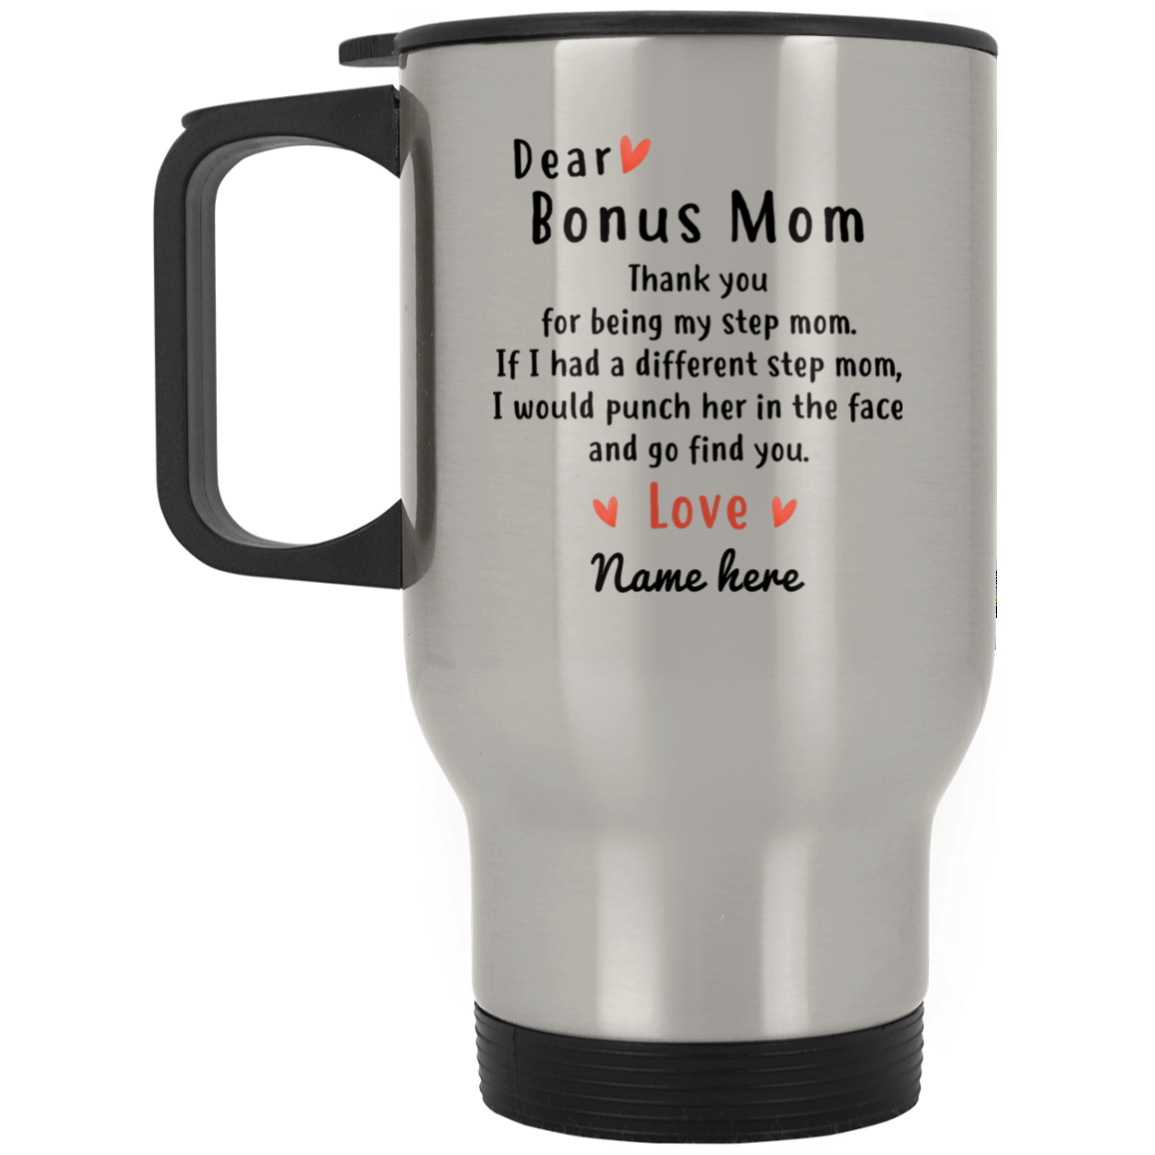 Bonus Mom Thank You Personalized Travel Mugs - PersonalFury